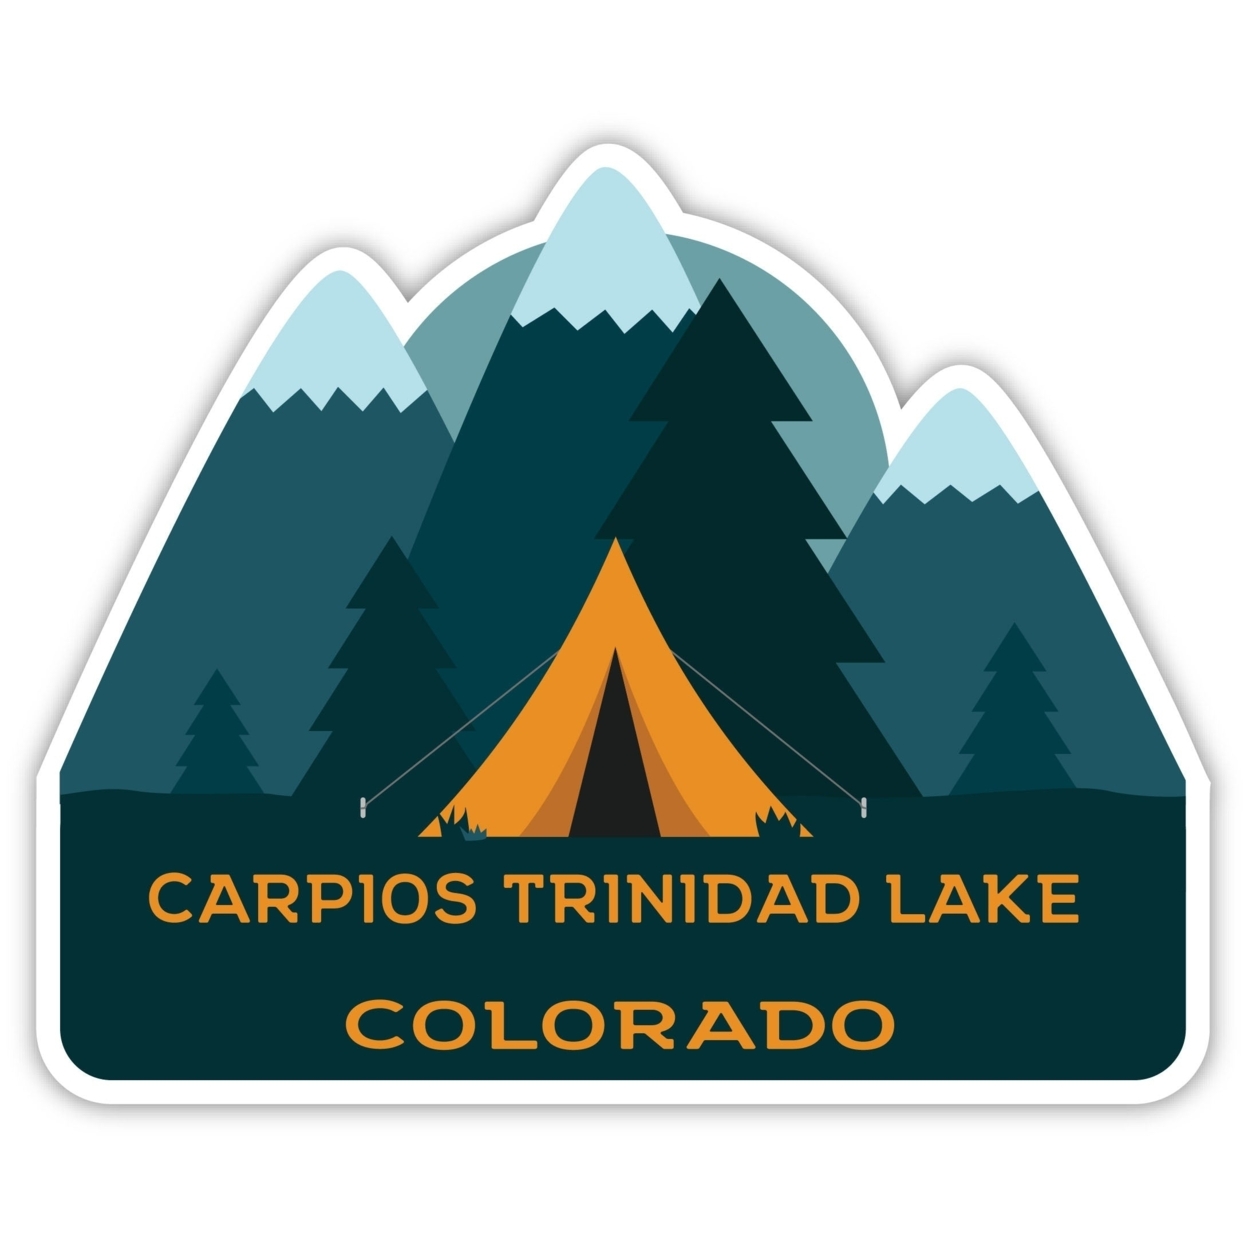 Carpios Trinidad Lake Colorado Souvenir Decorative Stickers (Choose Theme And Size) - Single Unit, 8-Inch, Tent